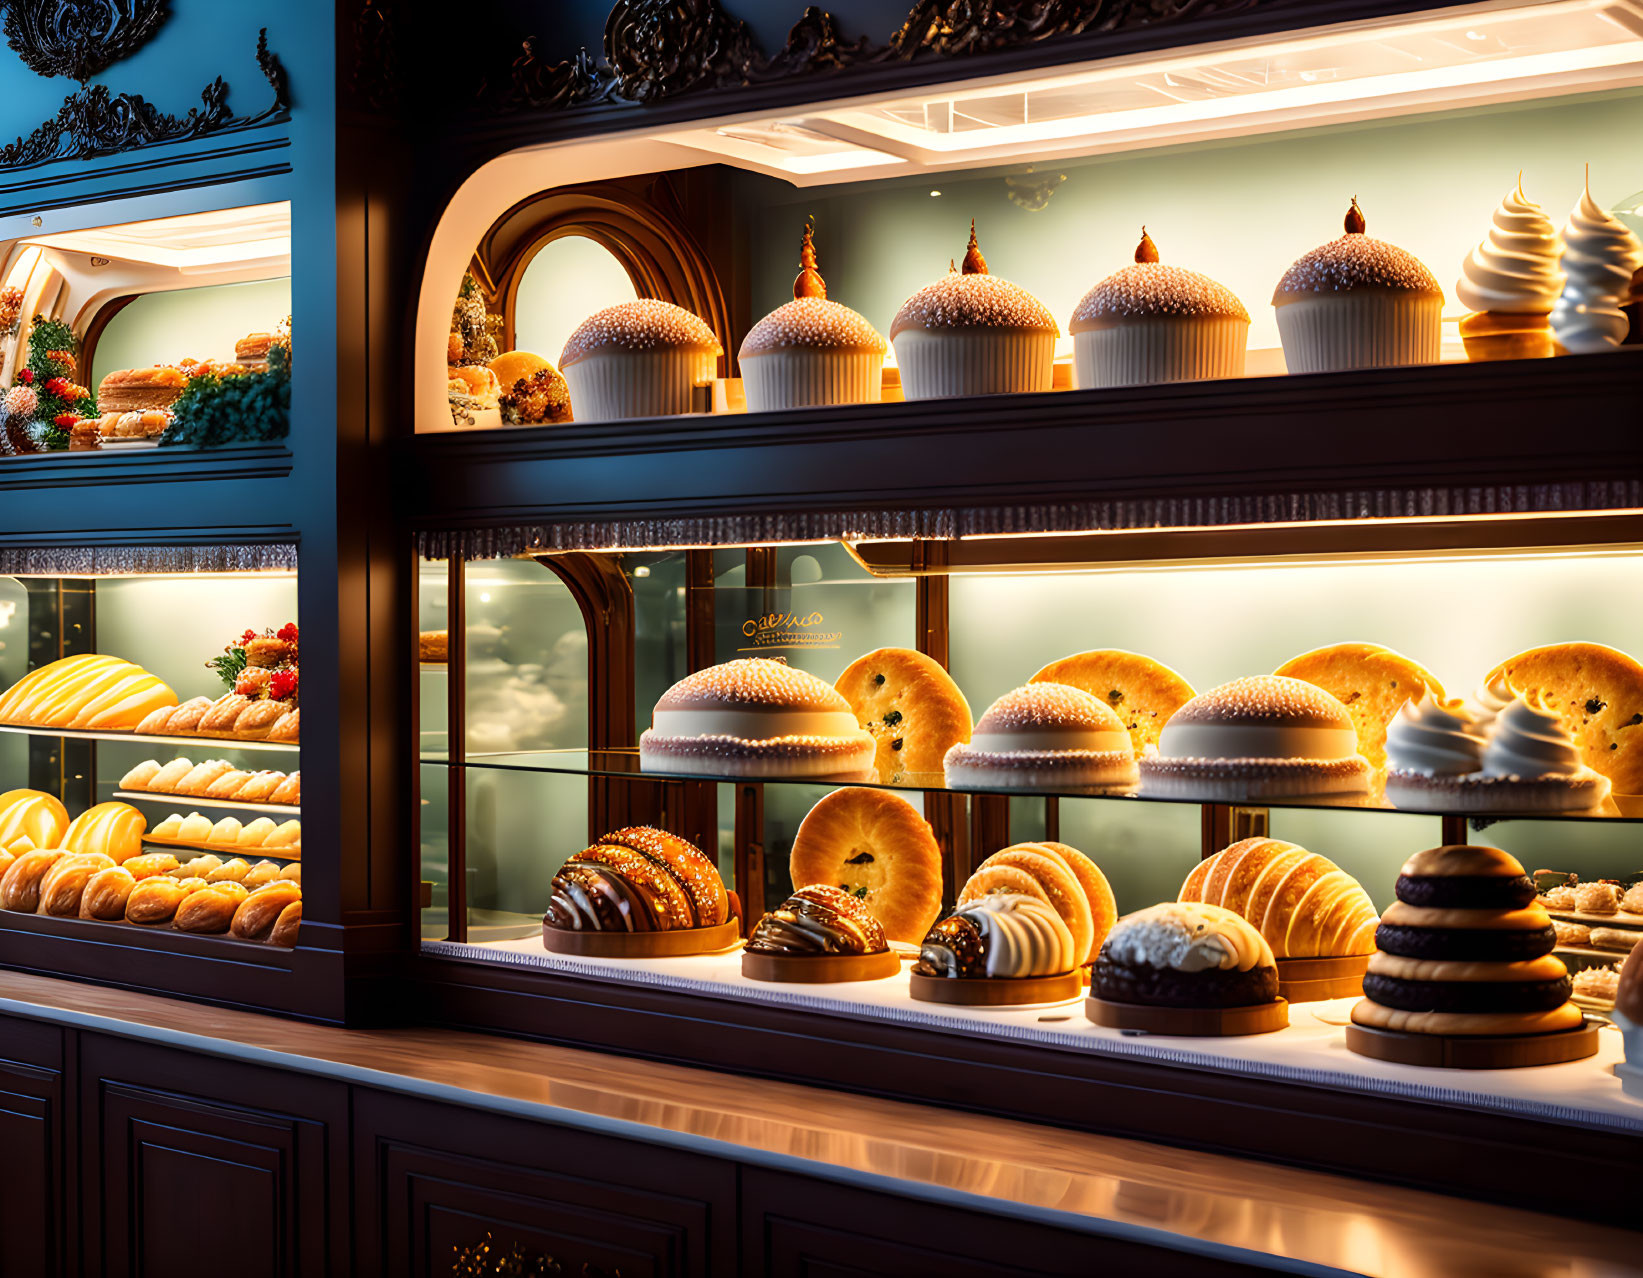 Freshly Baked Breads and Pastries in Elegant Bakery Display